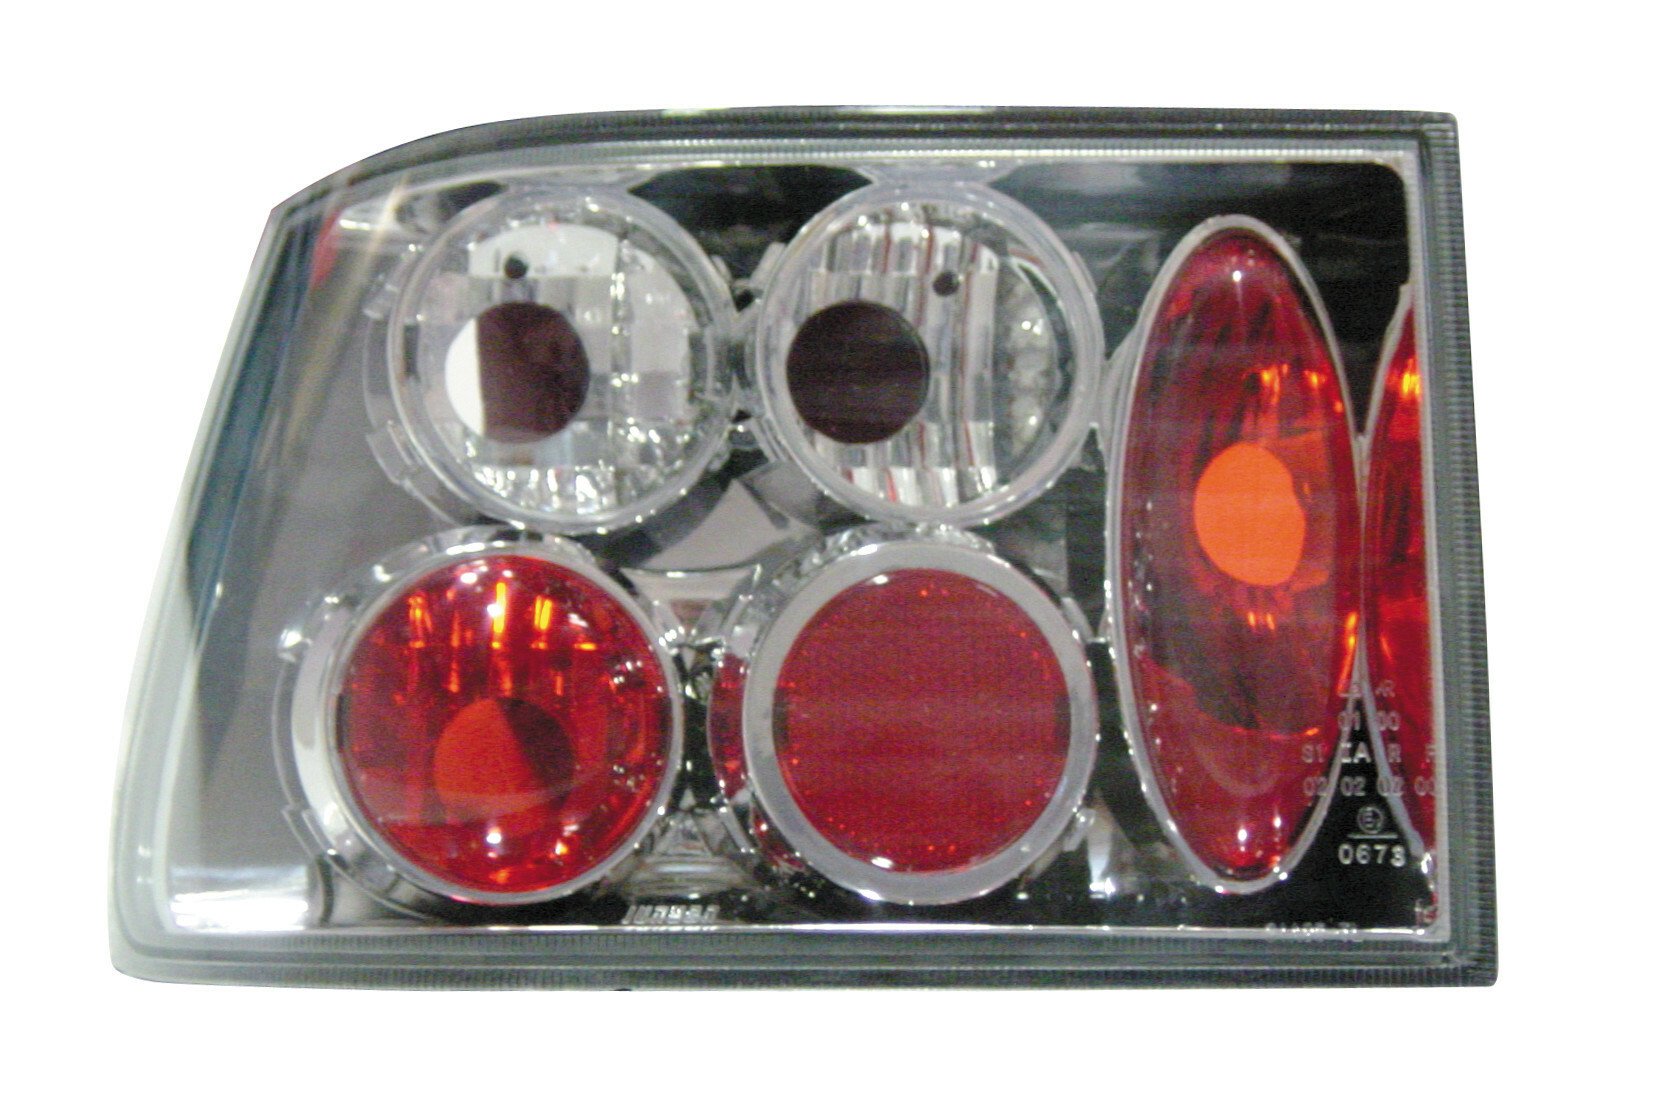 Pair of rear lights - Seat Ibiza (3/97-8/99) - Chrome thumb